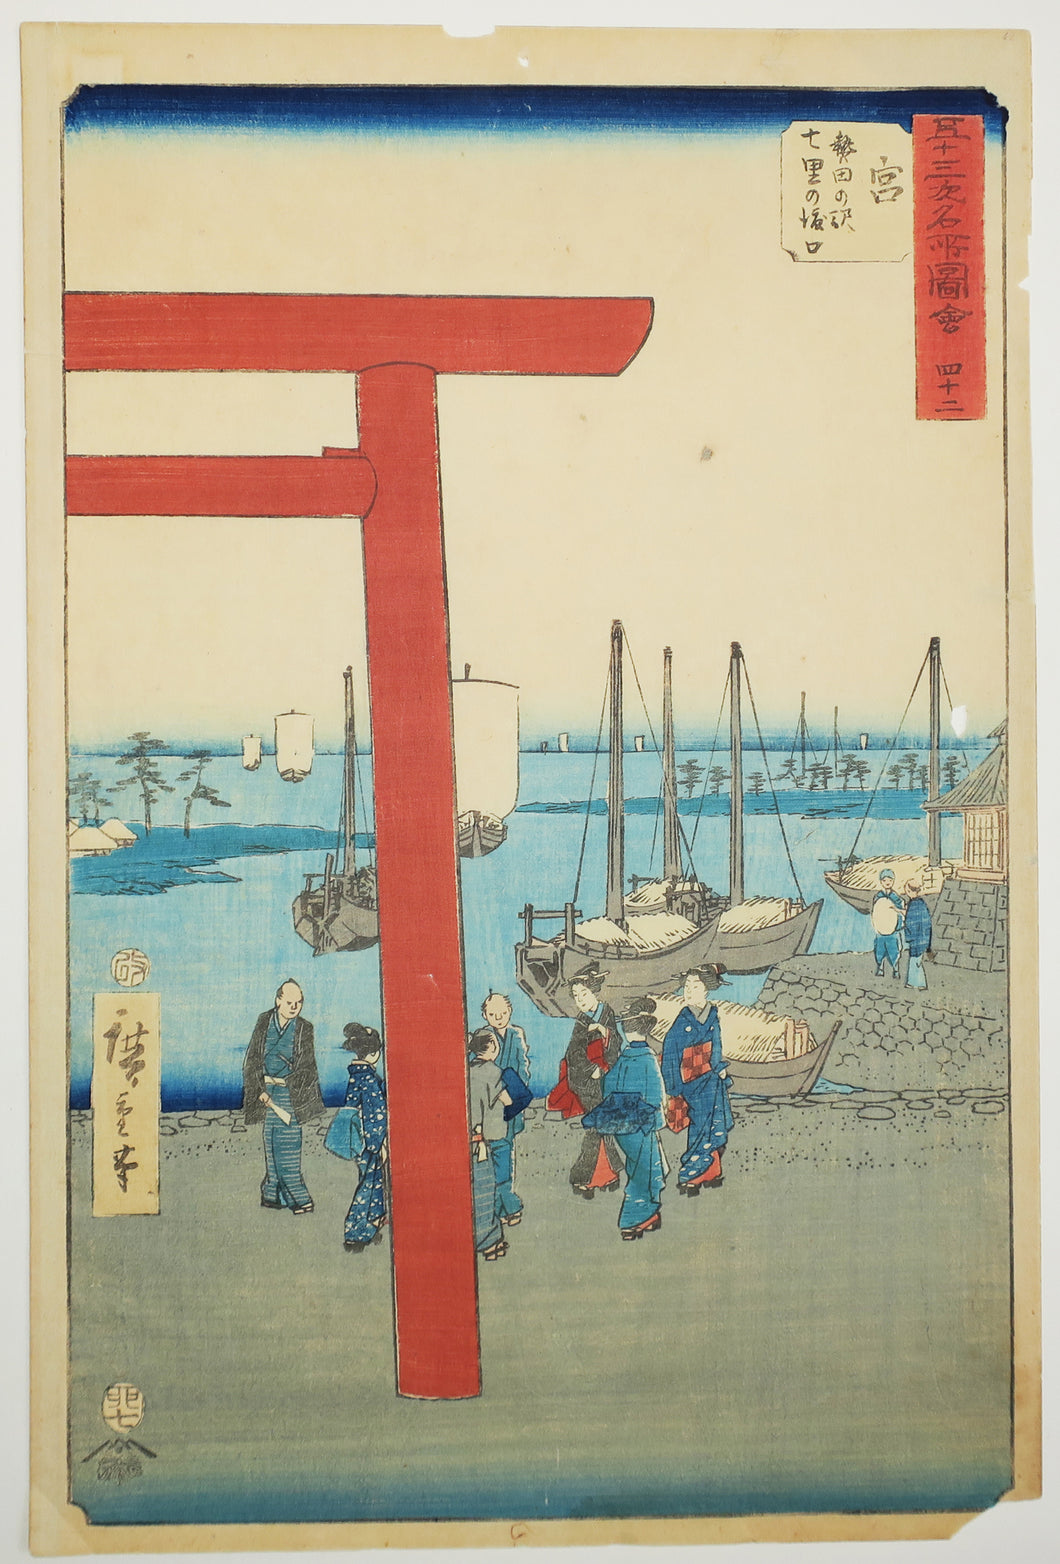 Le relais d'Atsuta et l'embarcadère pour le relais de Kuwama (Miya: Atsuta no eki Shichiri no watashiguchi). 1855.